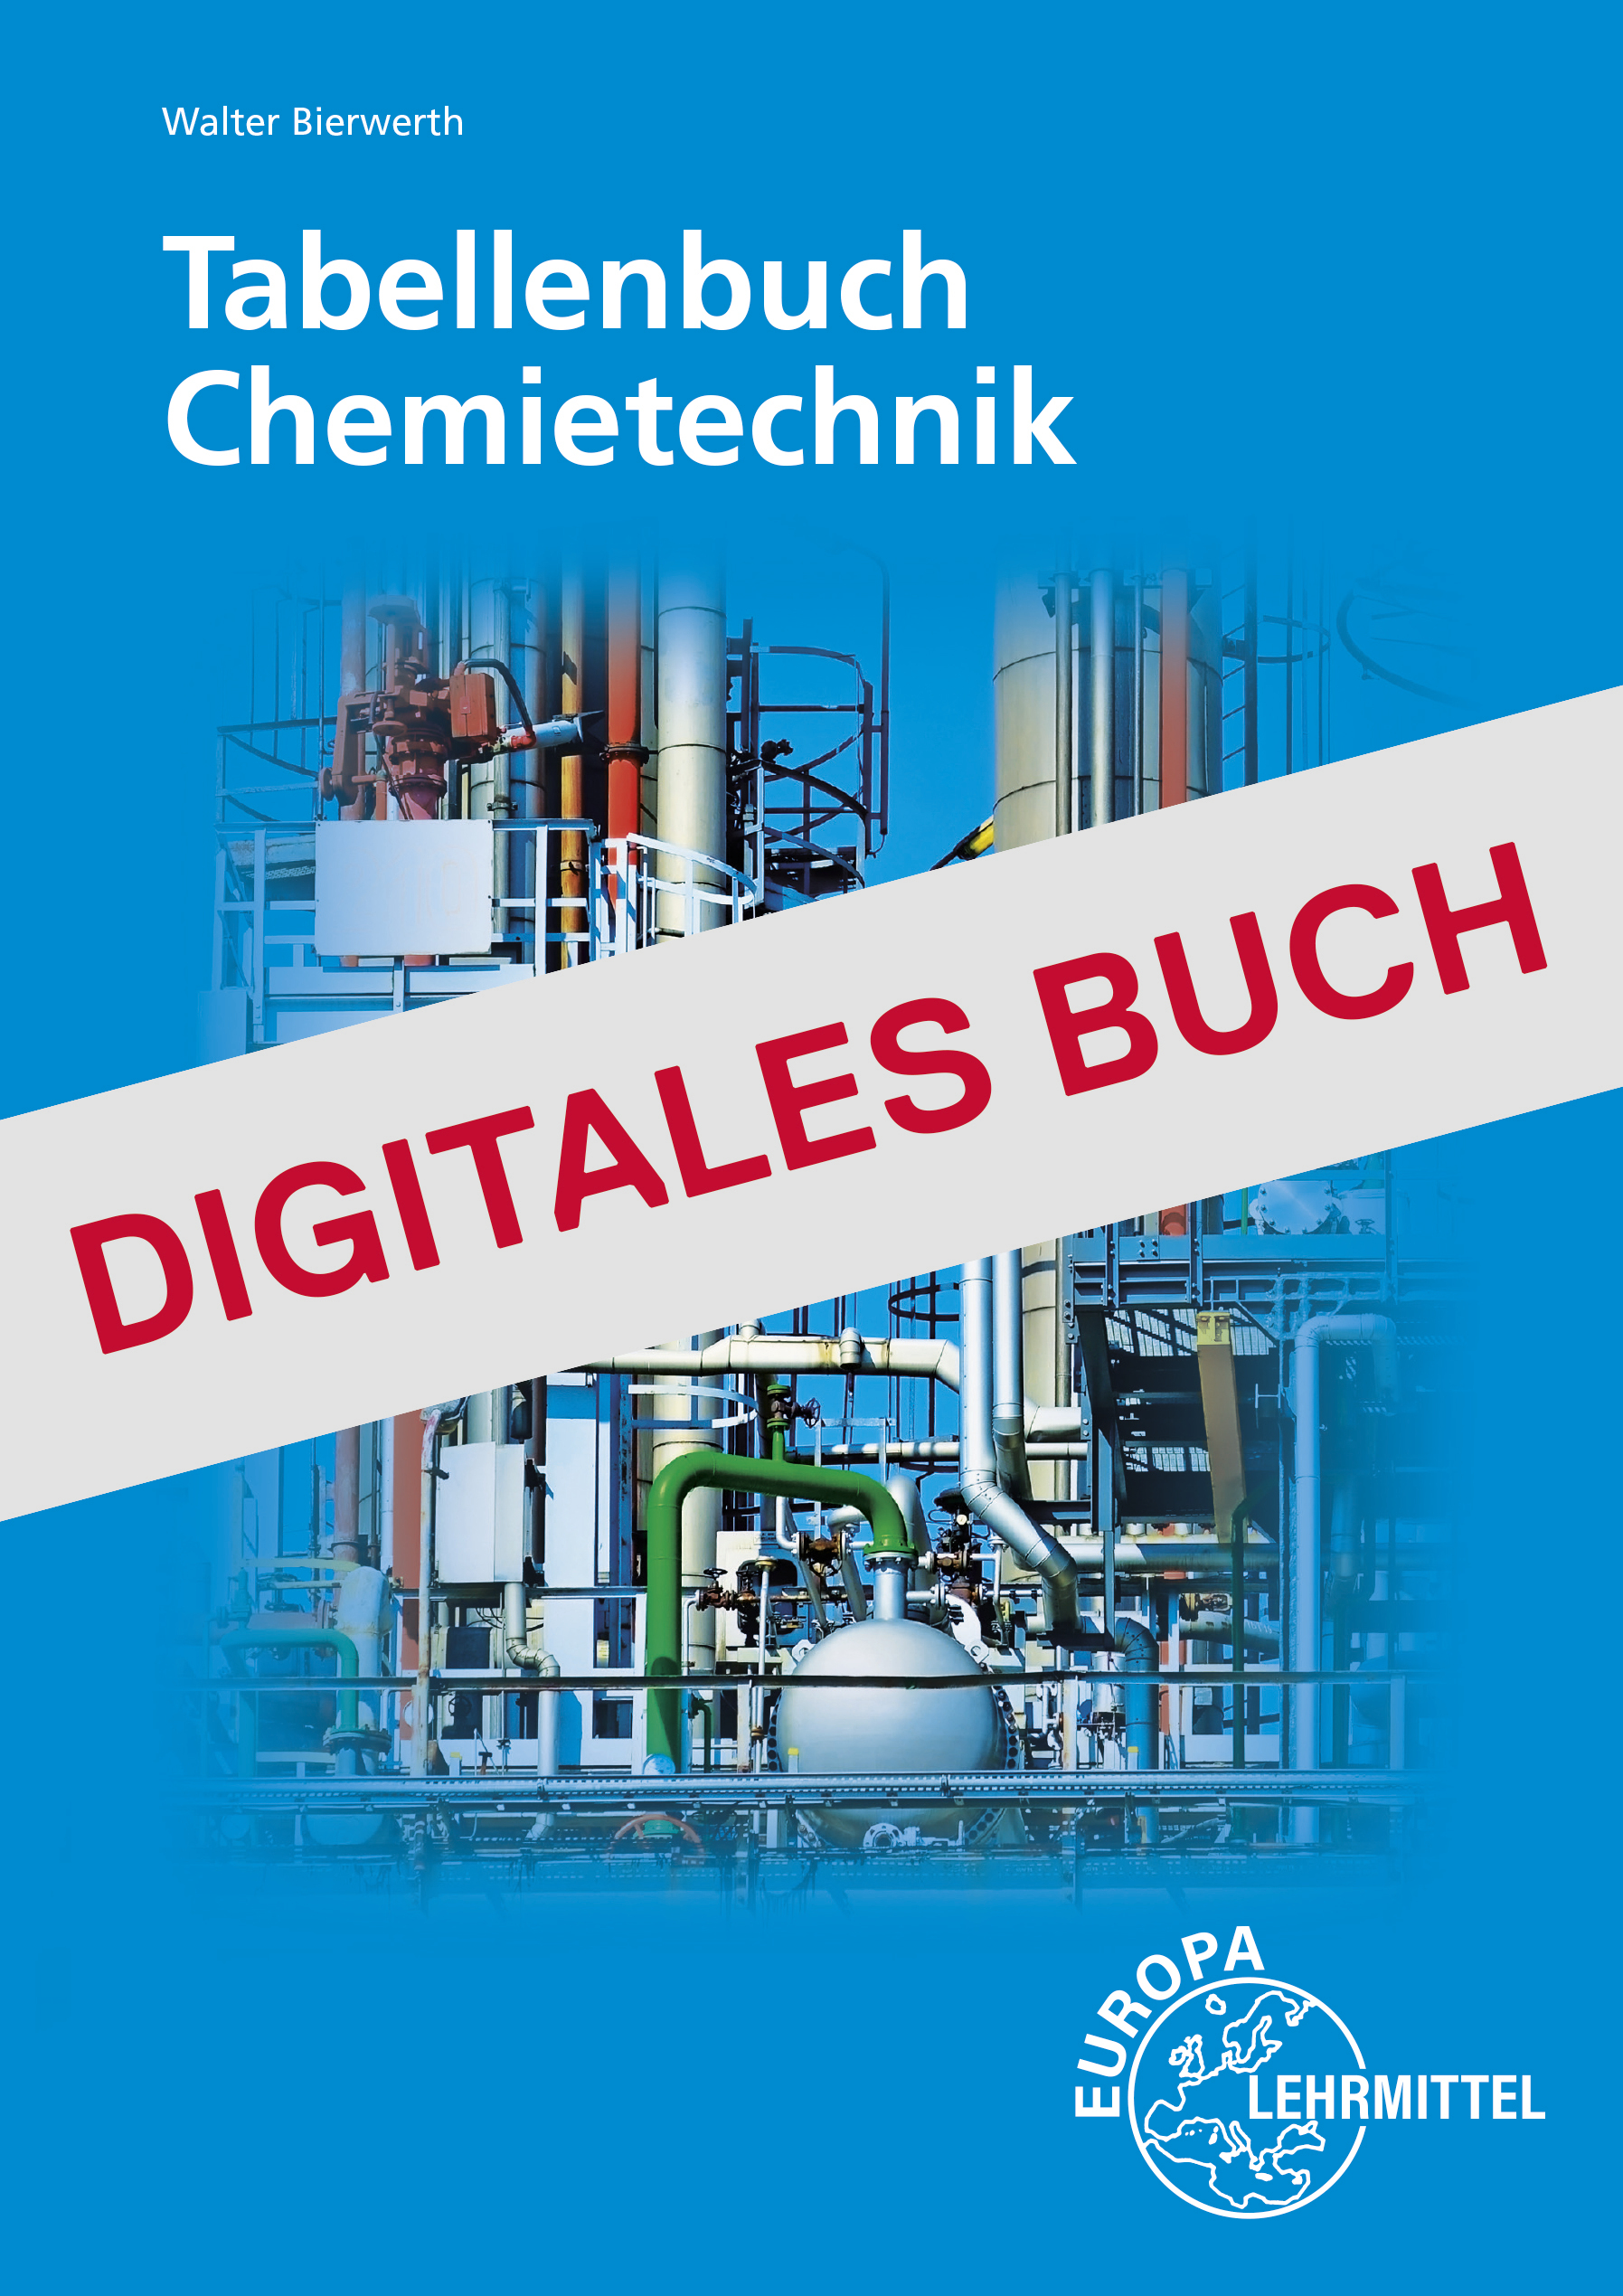 Tabellenbuch Chemietechnik - Digitales Buch